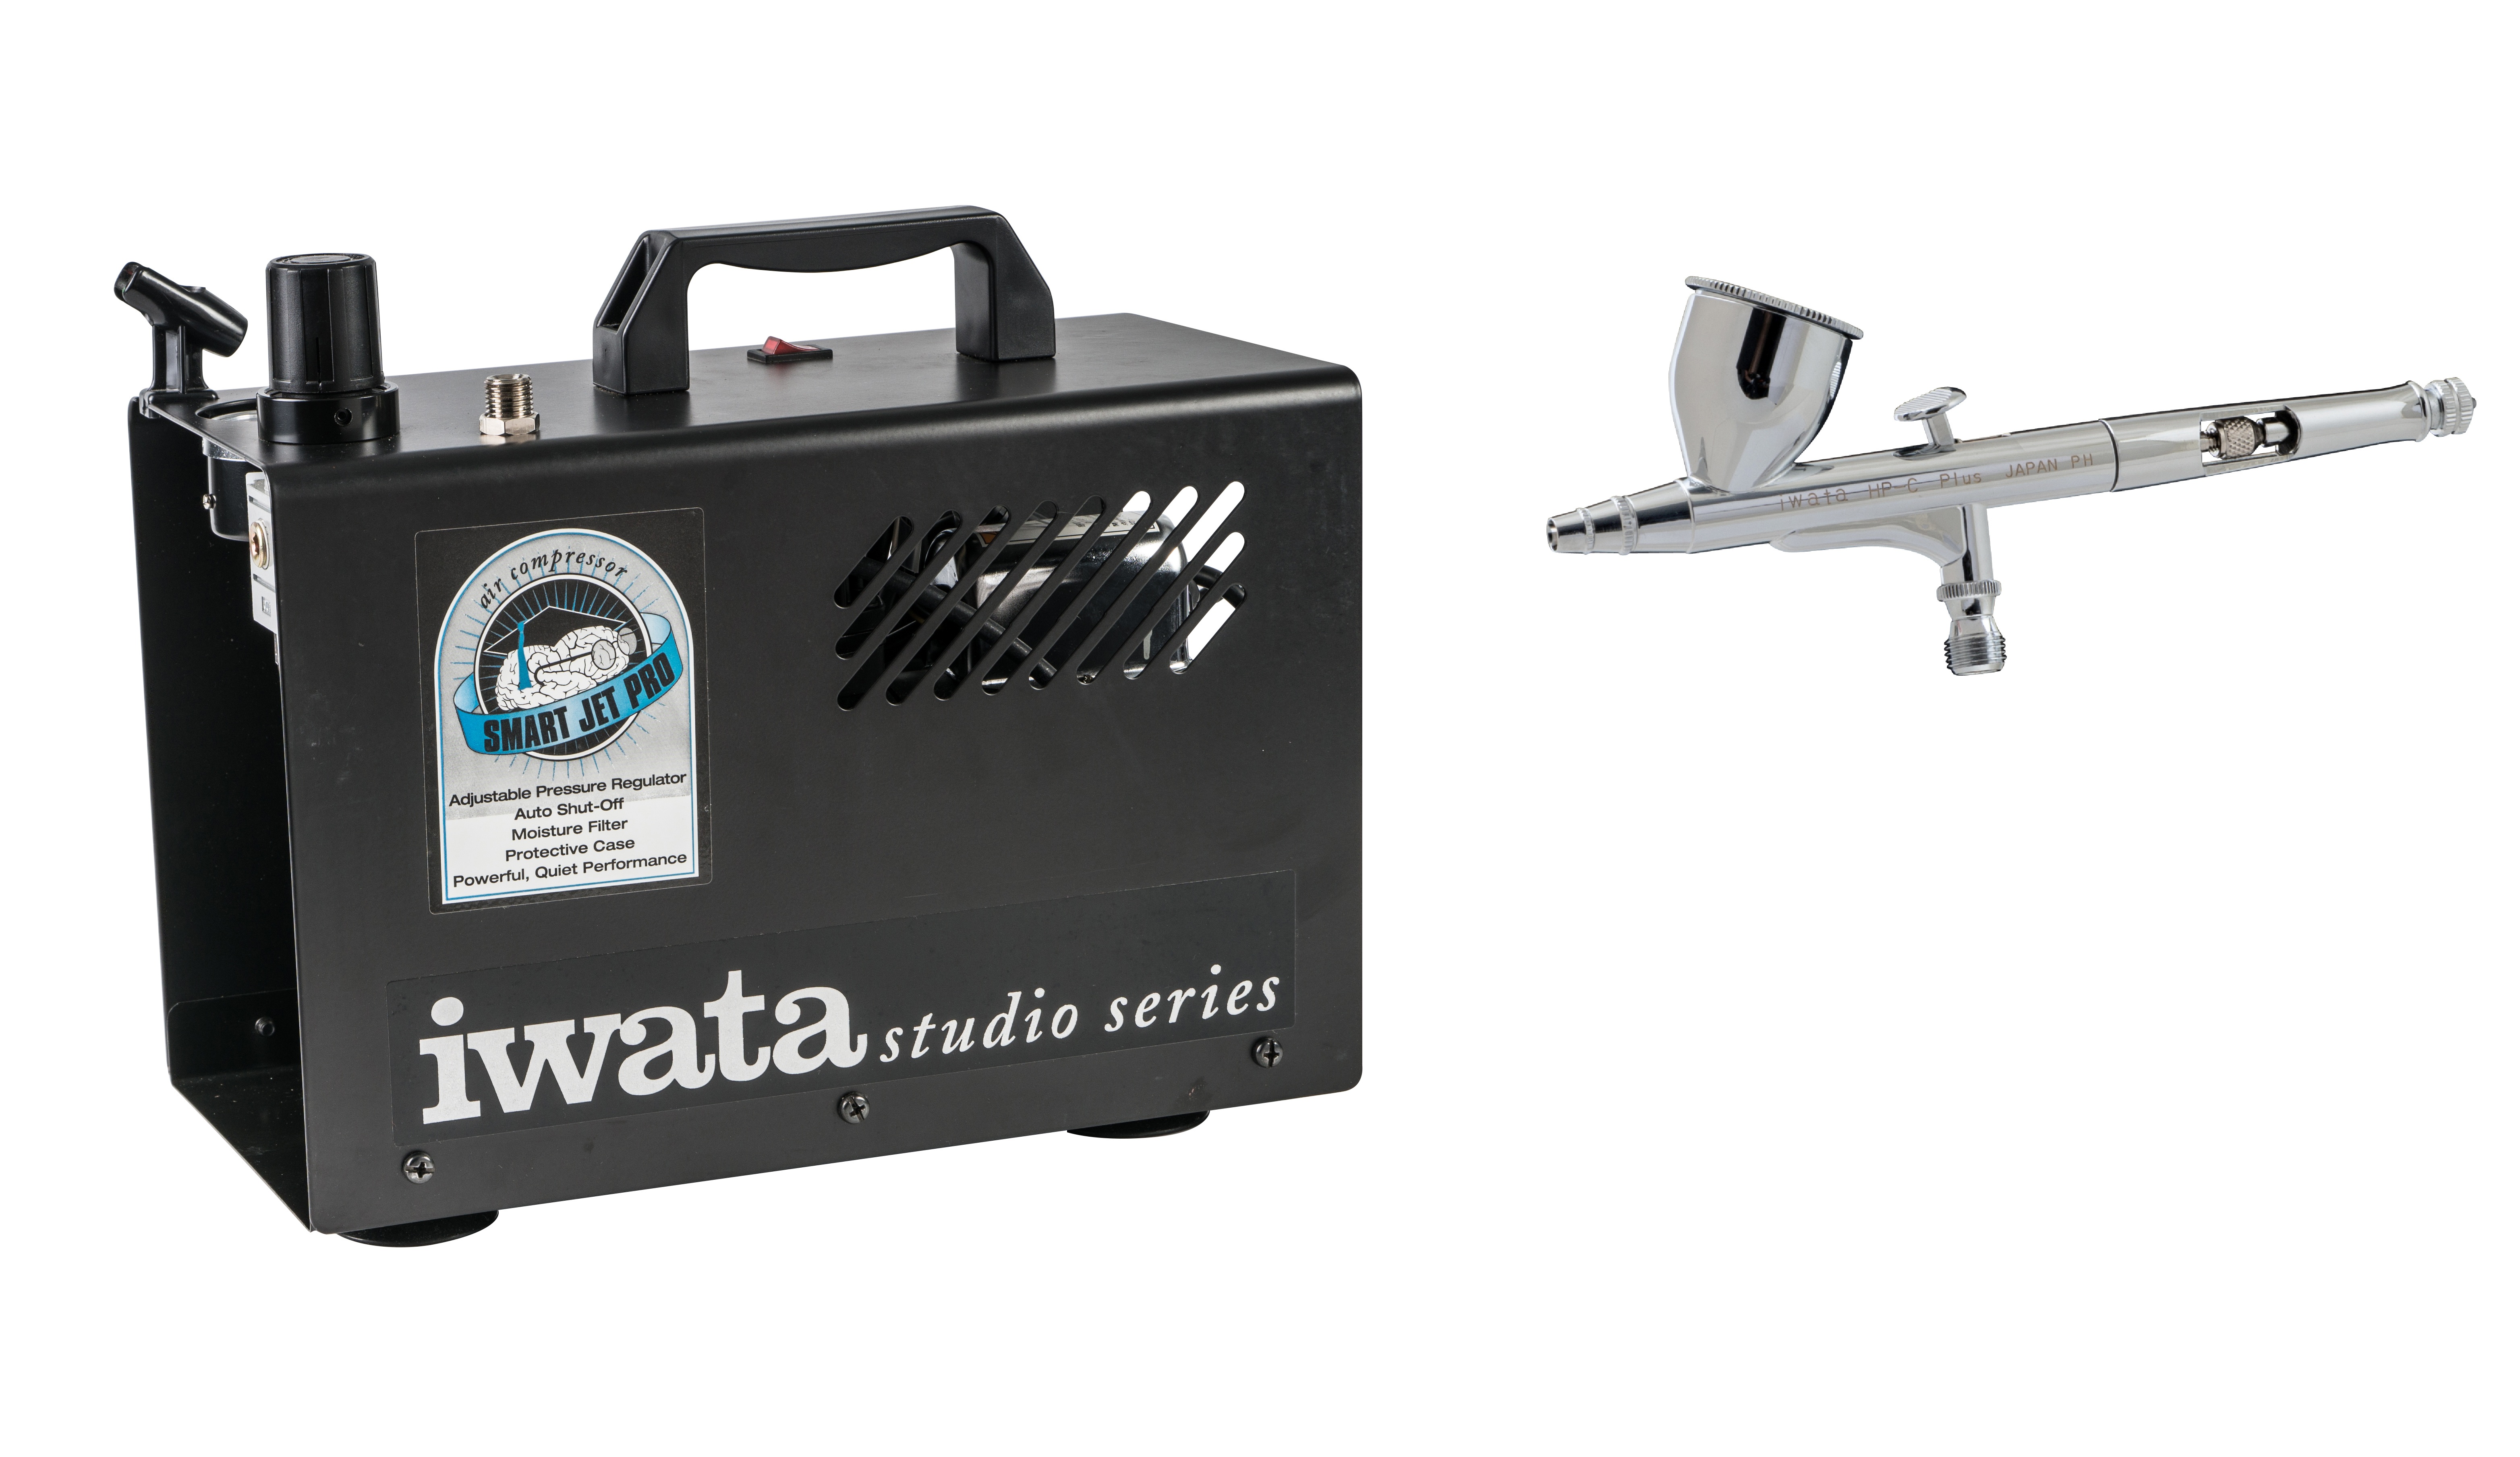 Iwata Professional Mobile Make-Up Kit with Ninja Jet Compressor